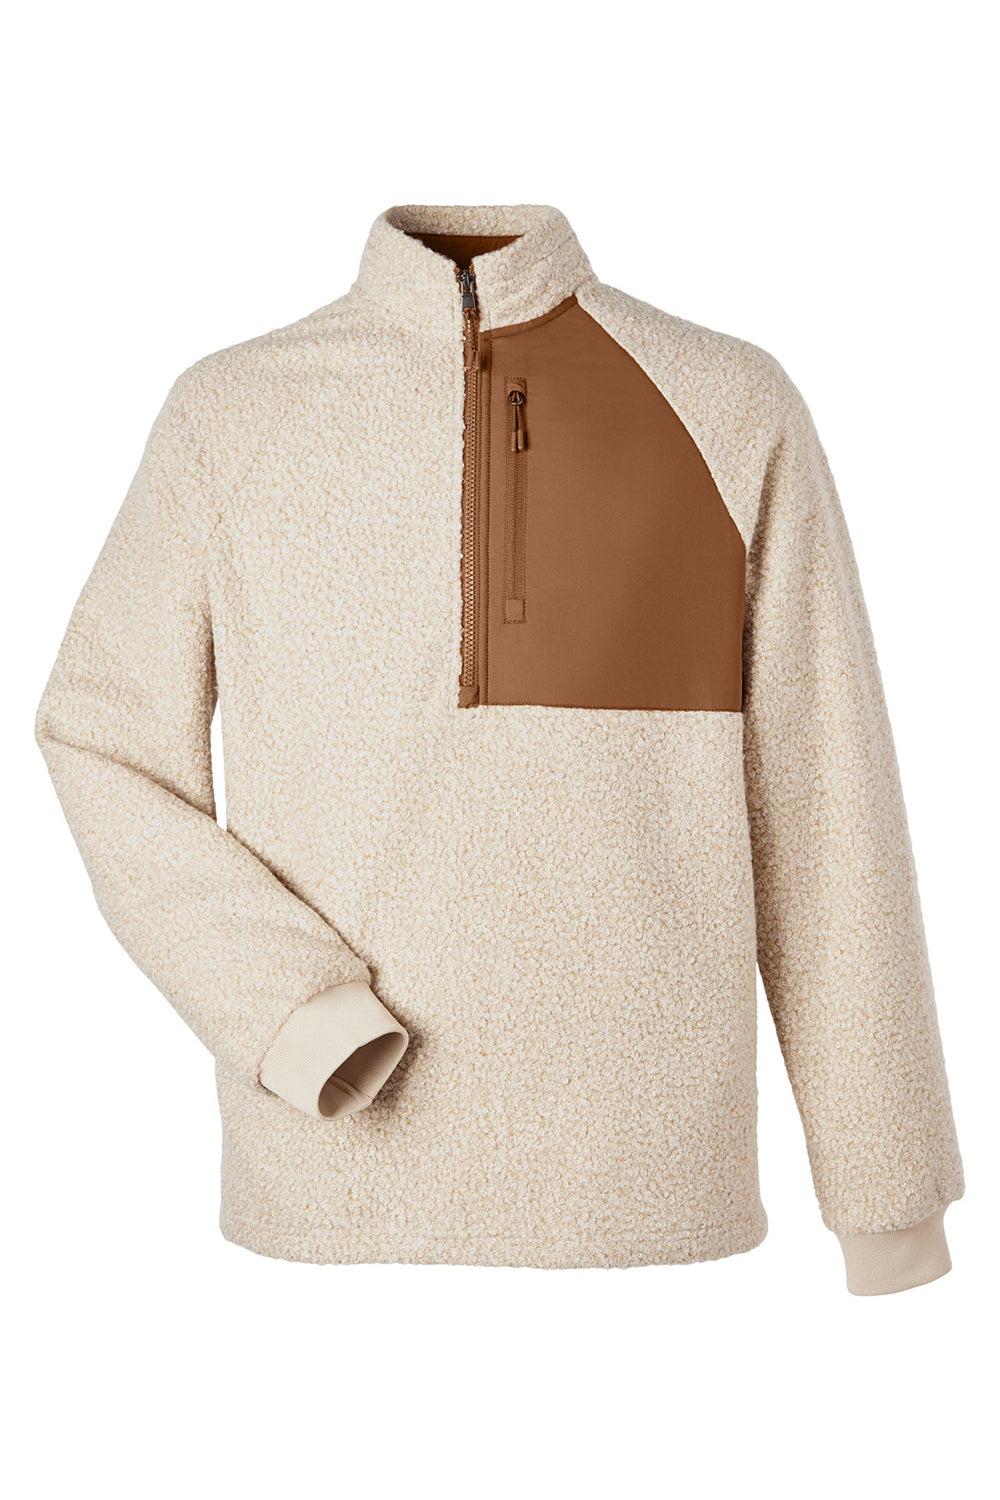 North End NE713 Mens Aura Sweater Fleece 1/4 Zip Sweatshirt Heather Oatmeal/Teak Flat Front